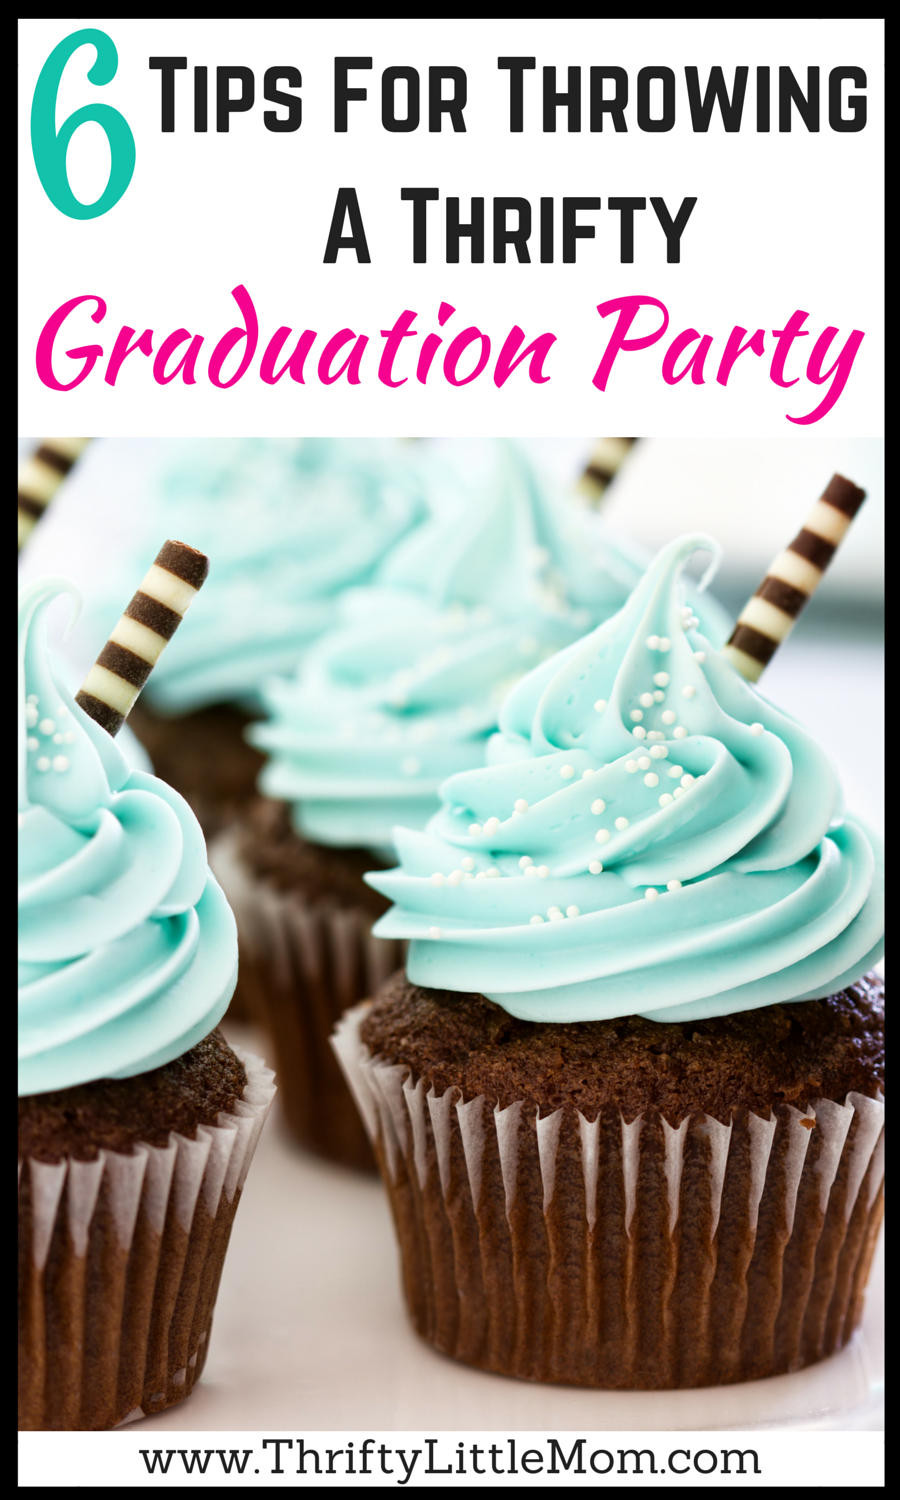 Graduation Party Advice Ideas
 6 Tips For Throwing a Thrifty Graduation Party Thrifty